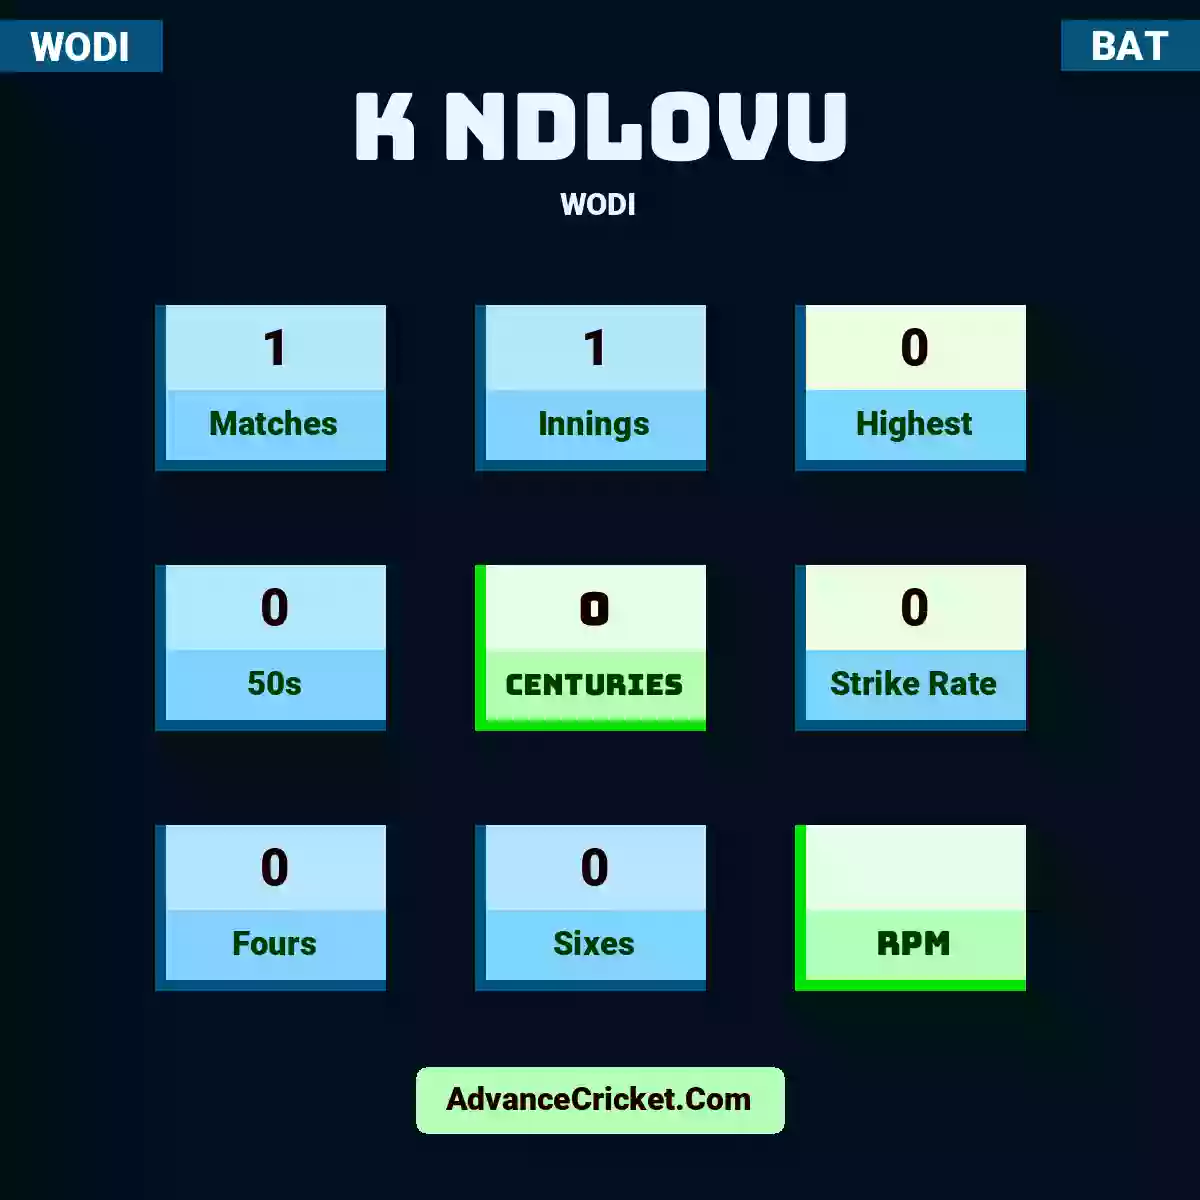 K Ndlovu WODI , K Ndlovu played 1 matches, scored 0 runs as highest, 0 half-centuries, and 0 centuries, with a strike rate of 0. K.Ndlovu hit 0 fours and 0 sixes.